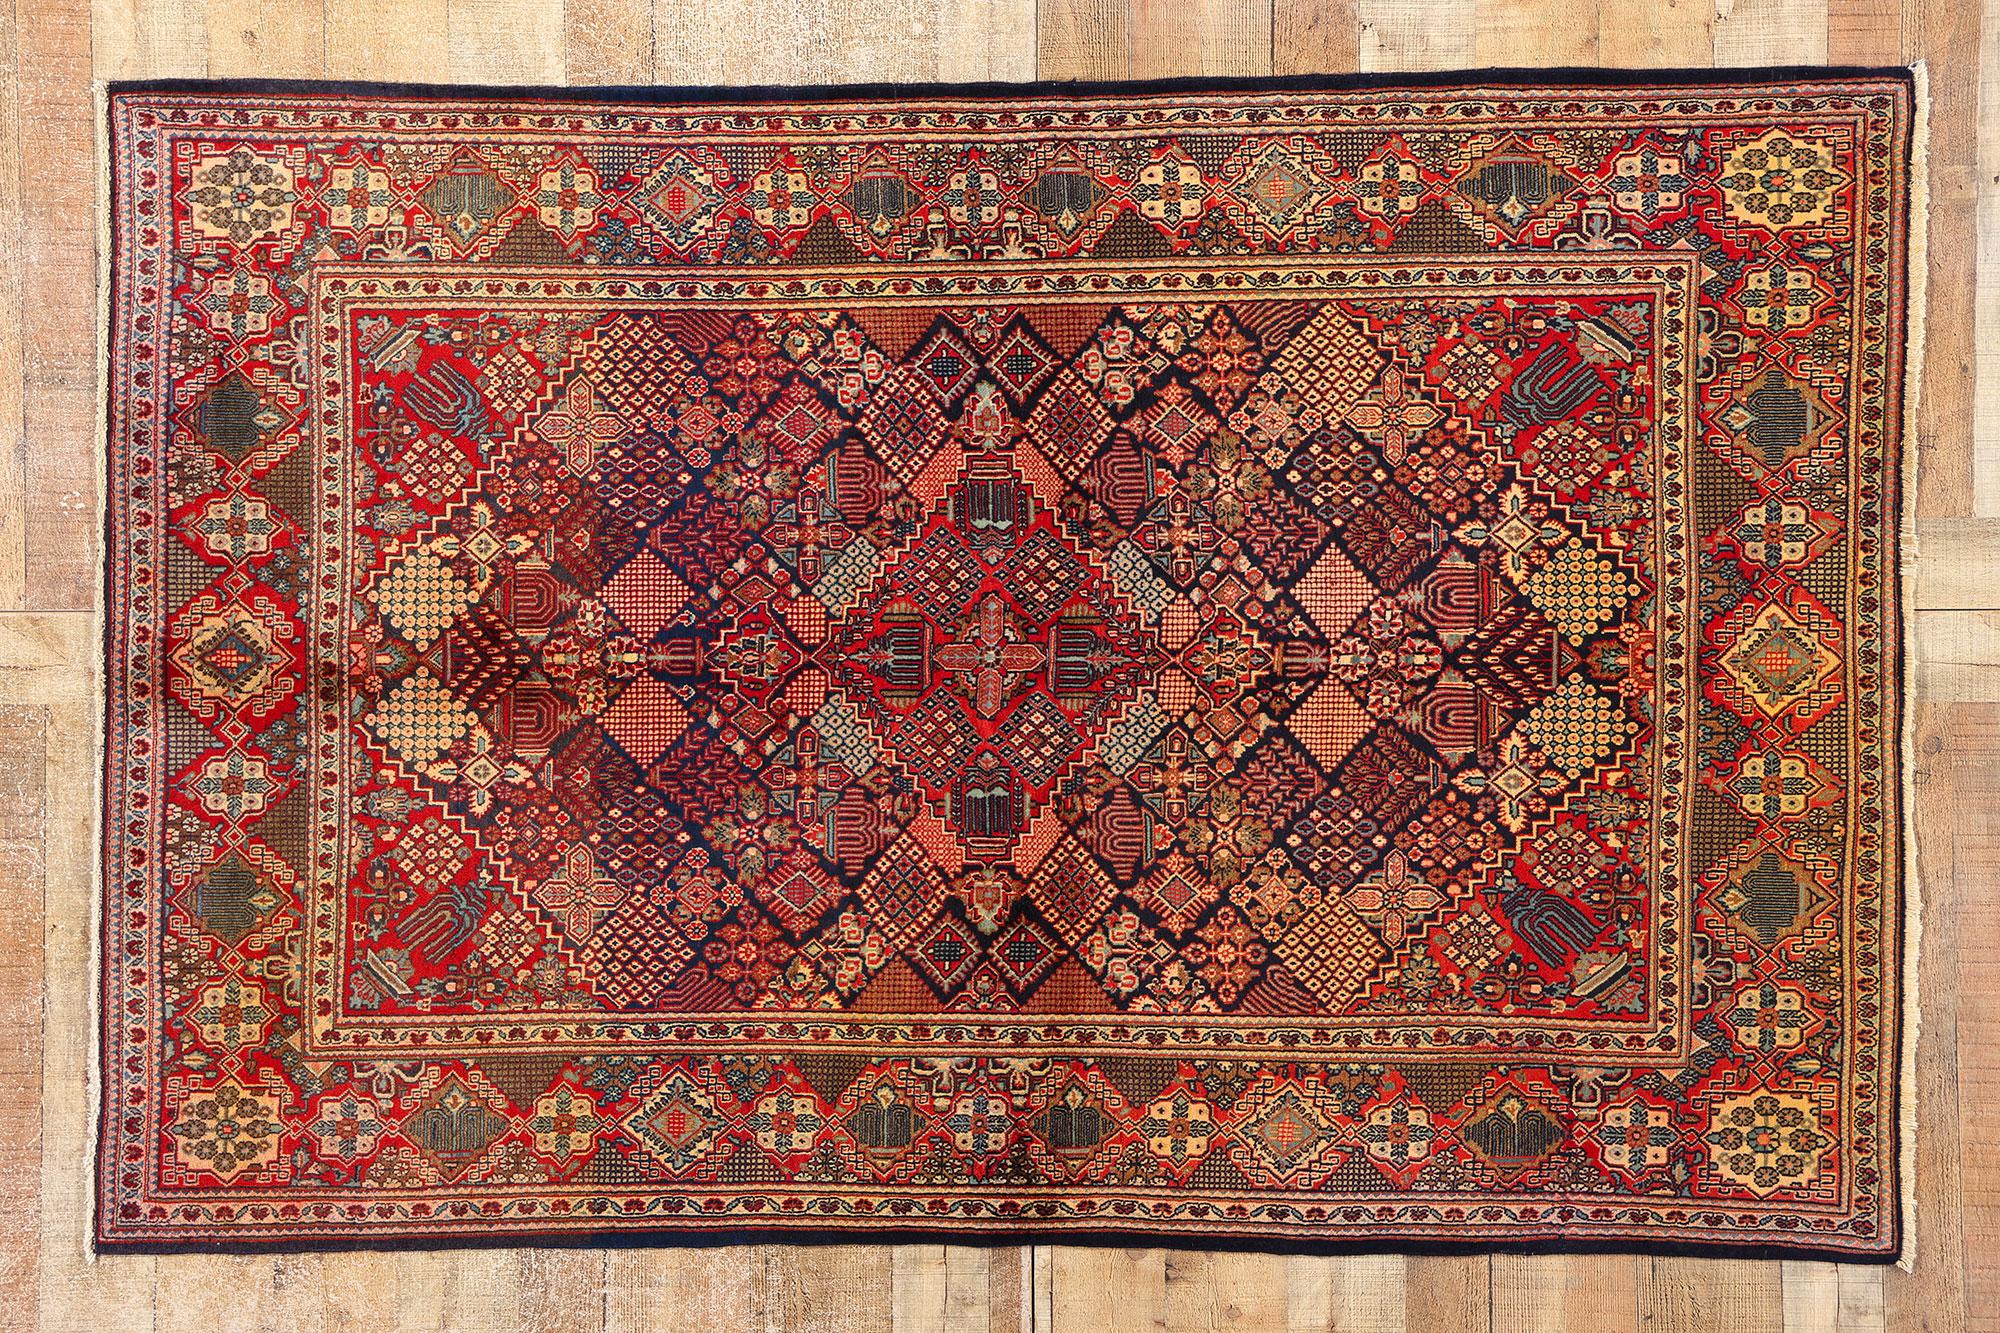 Antique Persian Kashan Rug with Joshegan Diamond Design and Jewel-Tone Colors For Sale 11